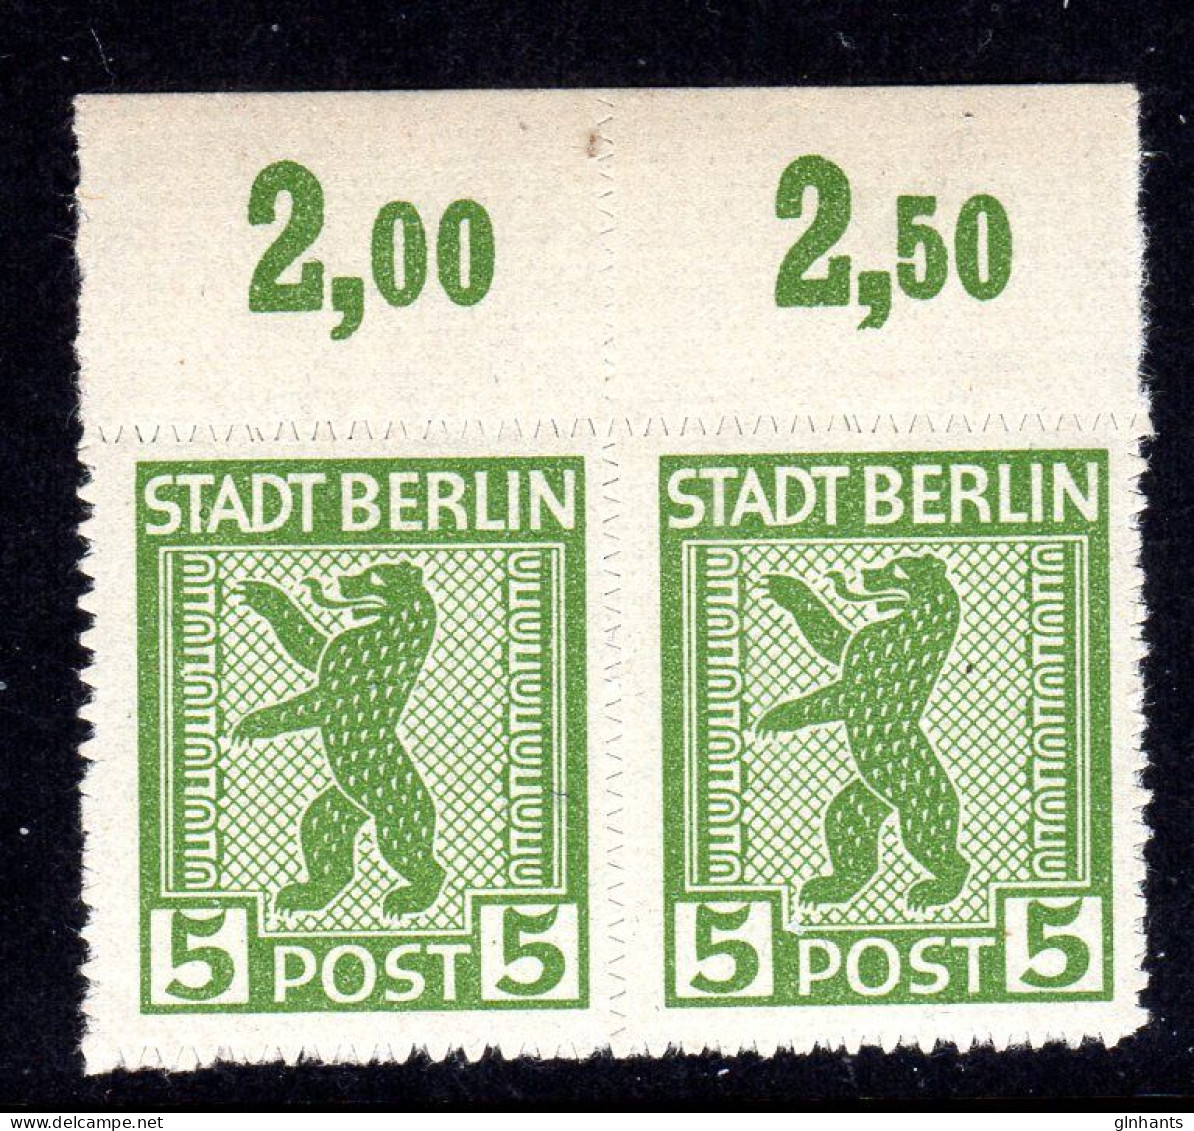 GERMANY BERLIN-BRANDENBURG - 1945 5PF BEAR STAMP IN PAIR ZIGZAG ROULETTE FINE MNH ** - Berlin & Brandebourg